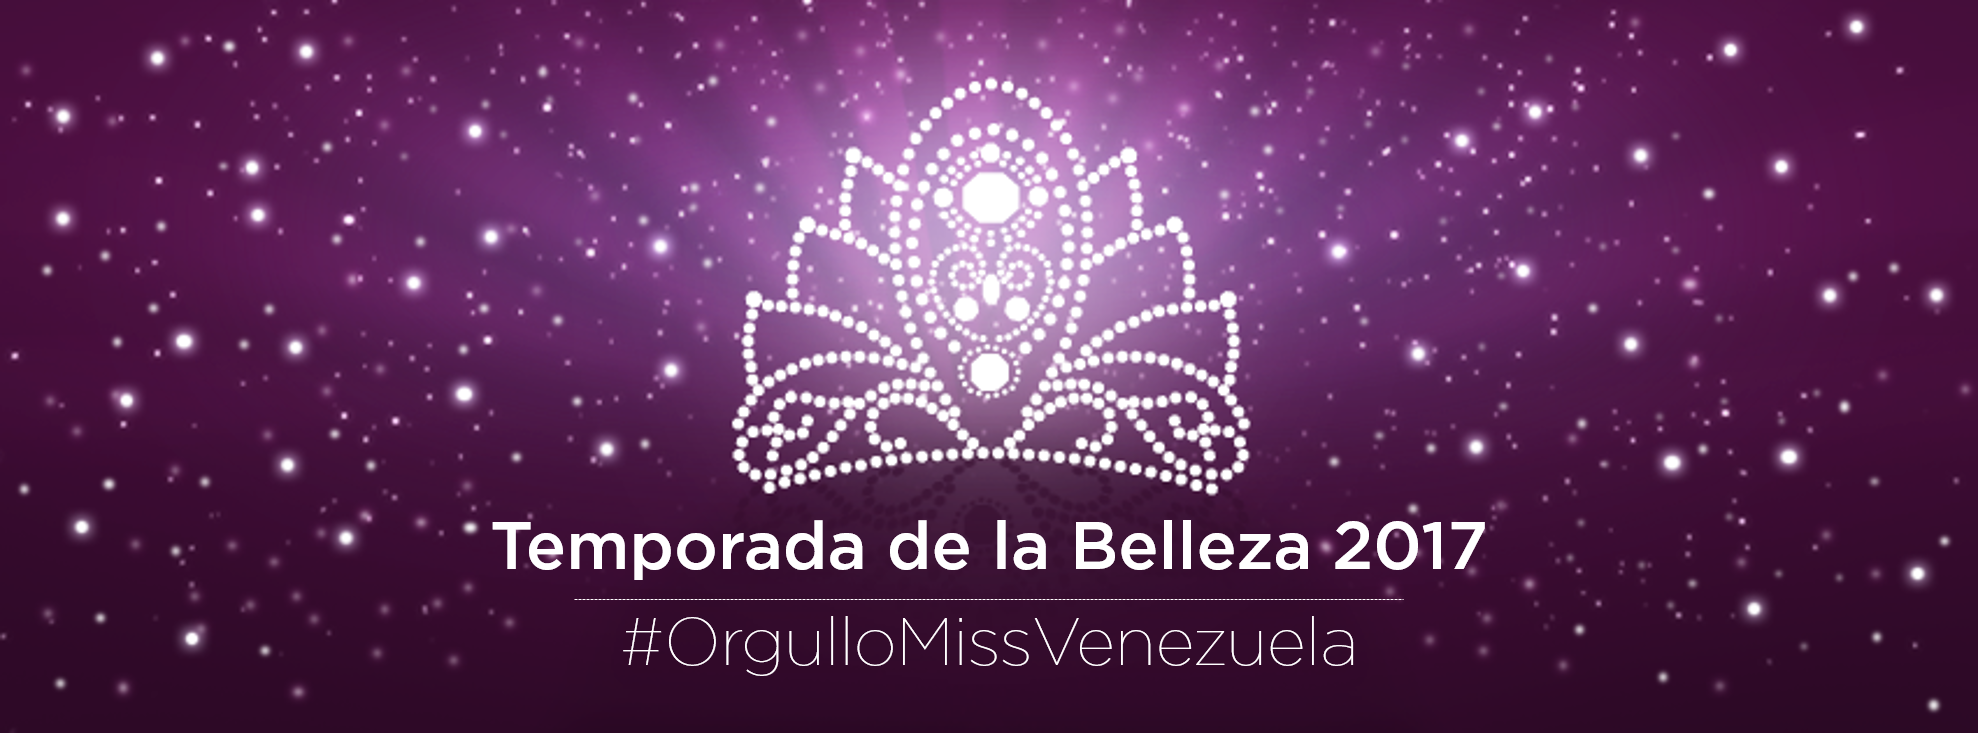 Miss Venezuela Temporada de la Belleza 2017 Jonathan BlumJonathan